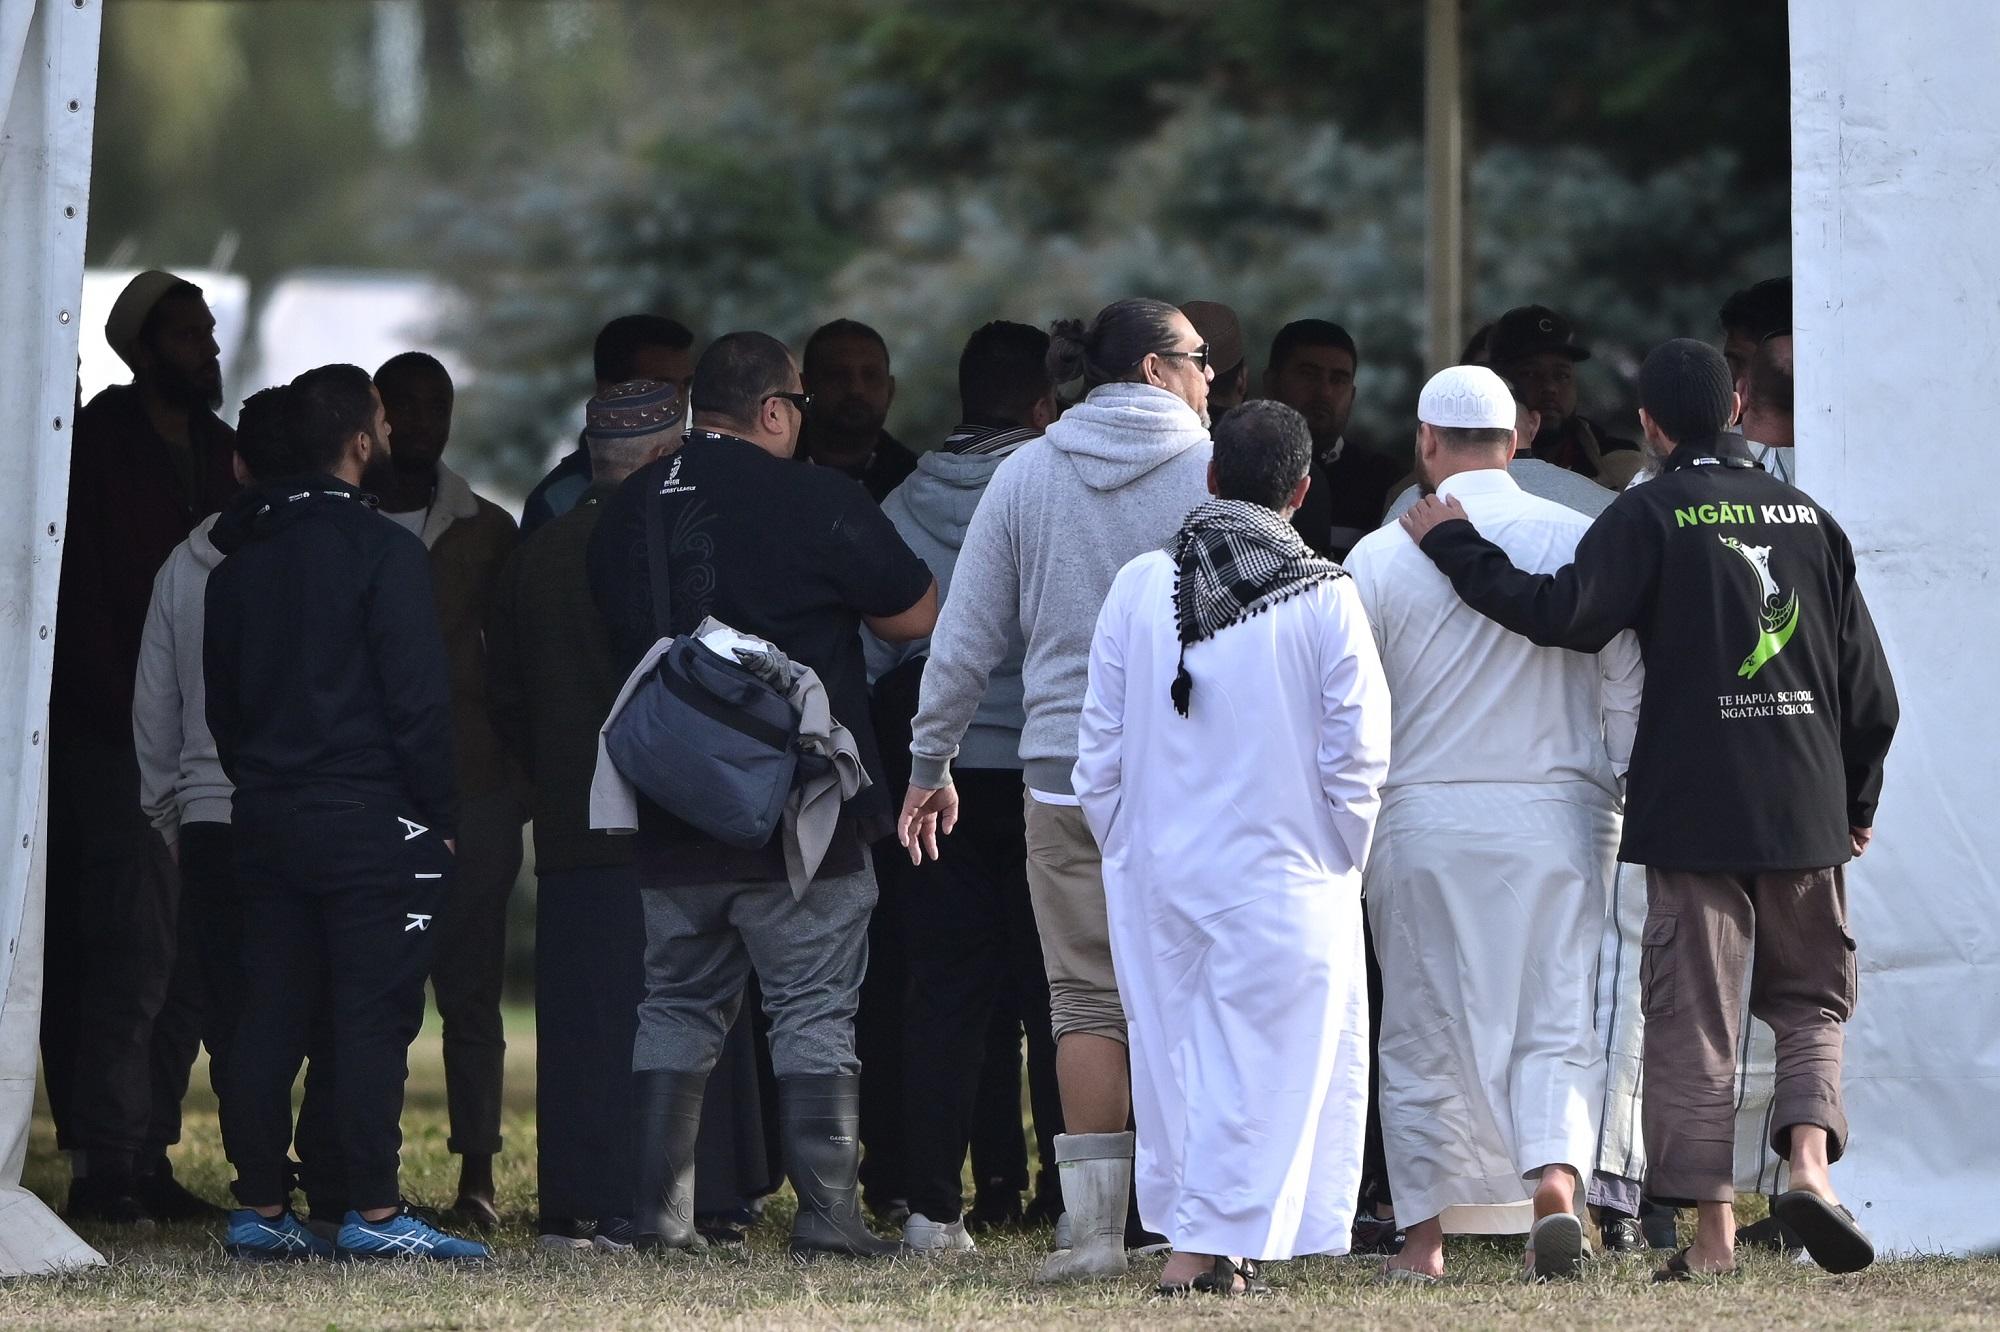 مسلمون في كرايس تشيرش يتجمعون لدفن ضحايا اعتداء نيوزيلندا. أ ف ب 